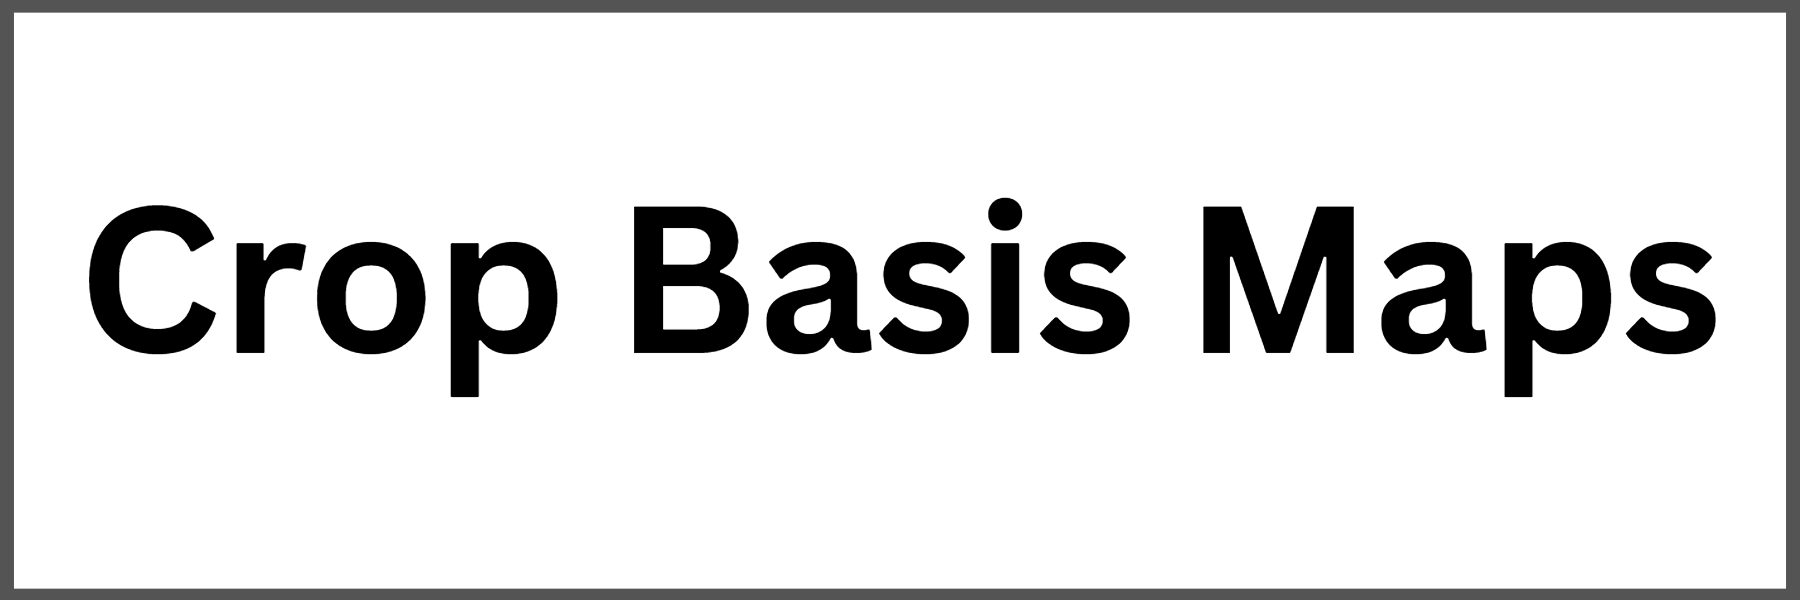 Crop Basis Maps